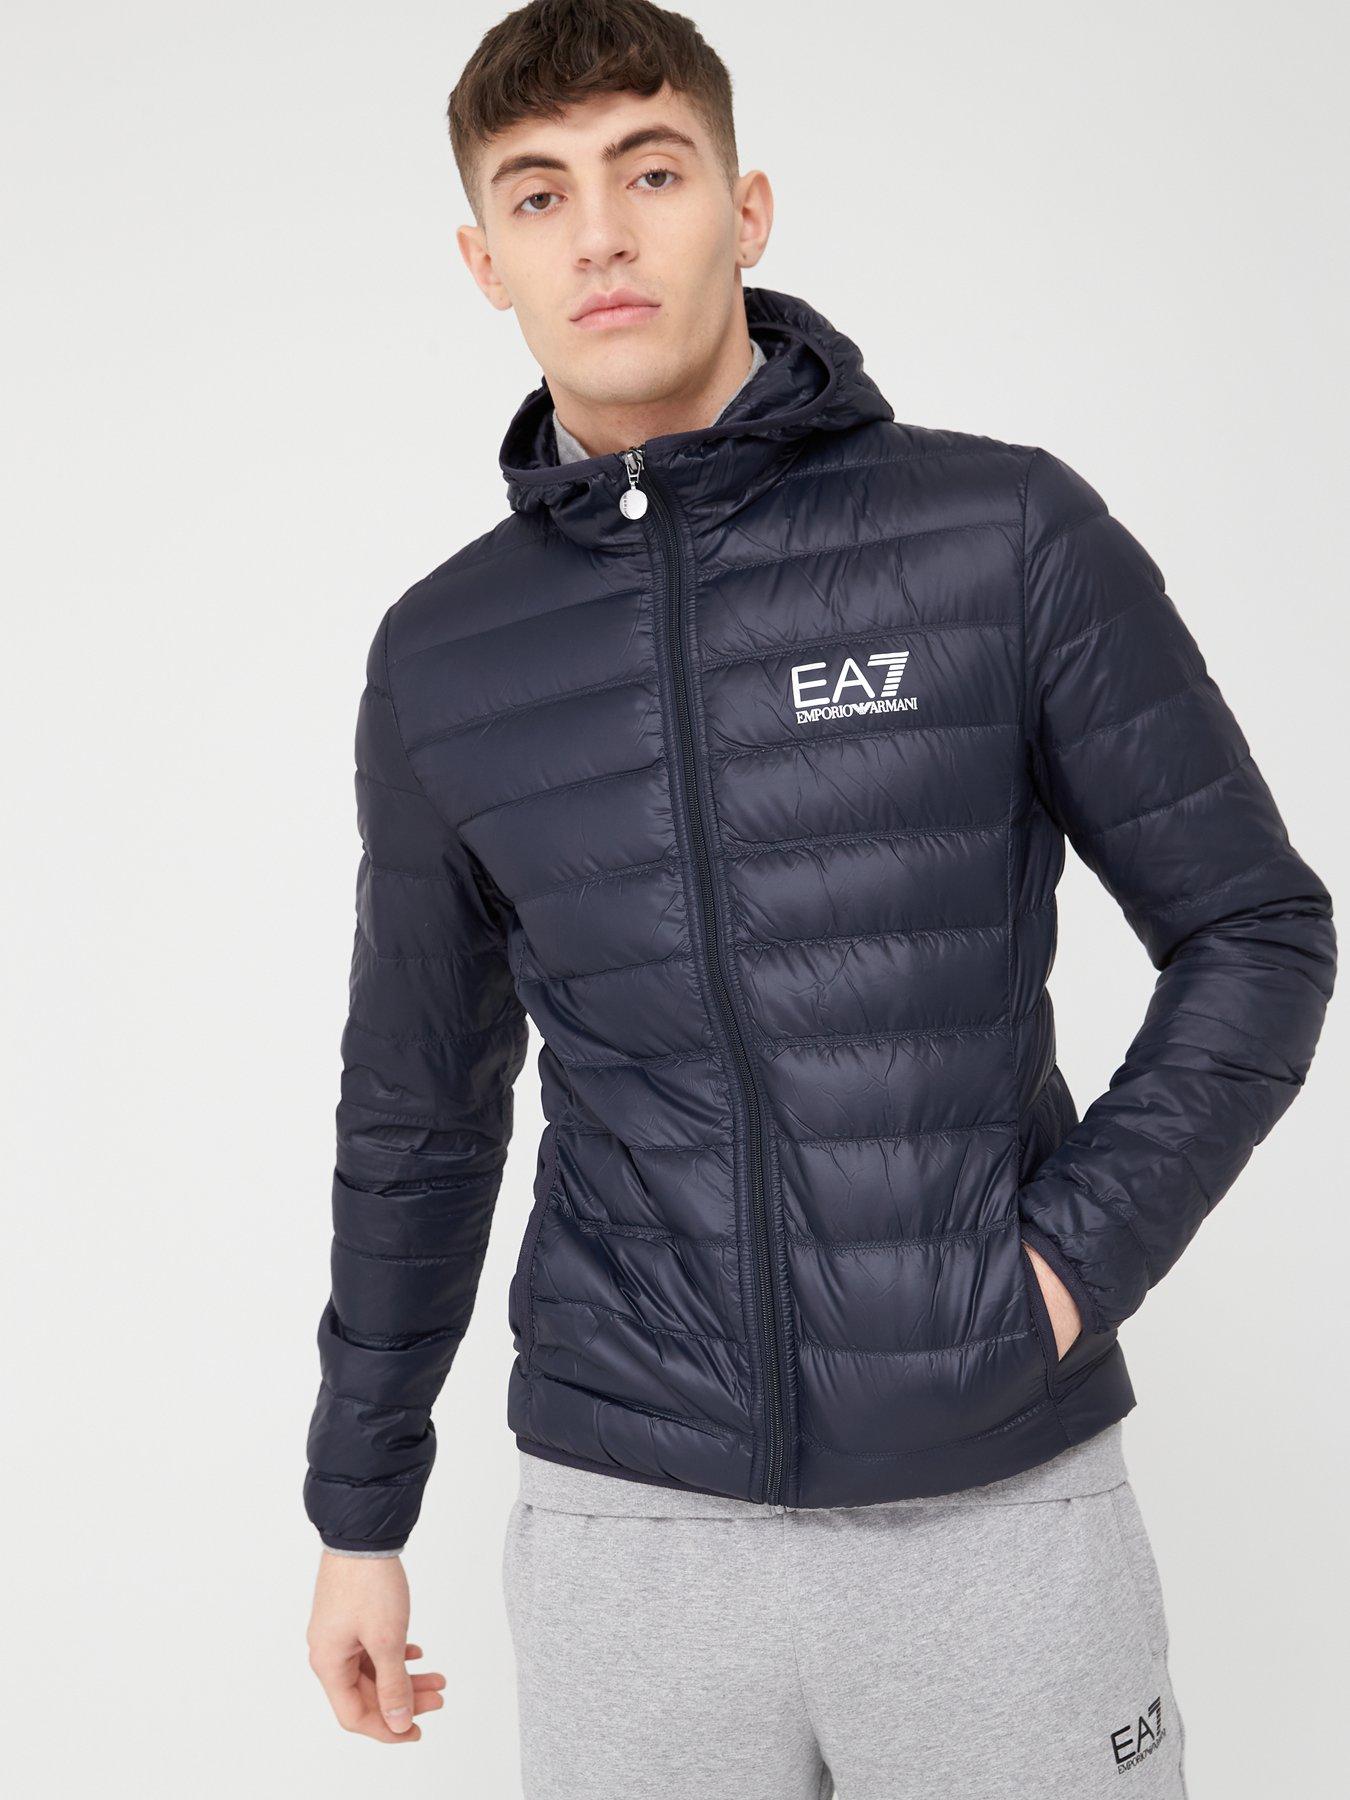 Jackets | Ea7 emporio armani | Coats & jackets | Men 